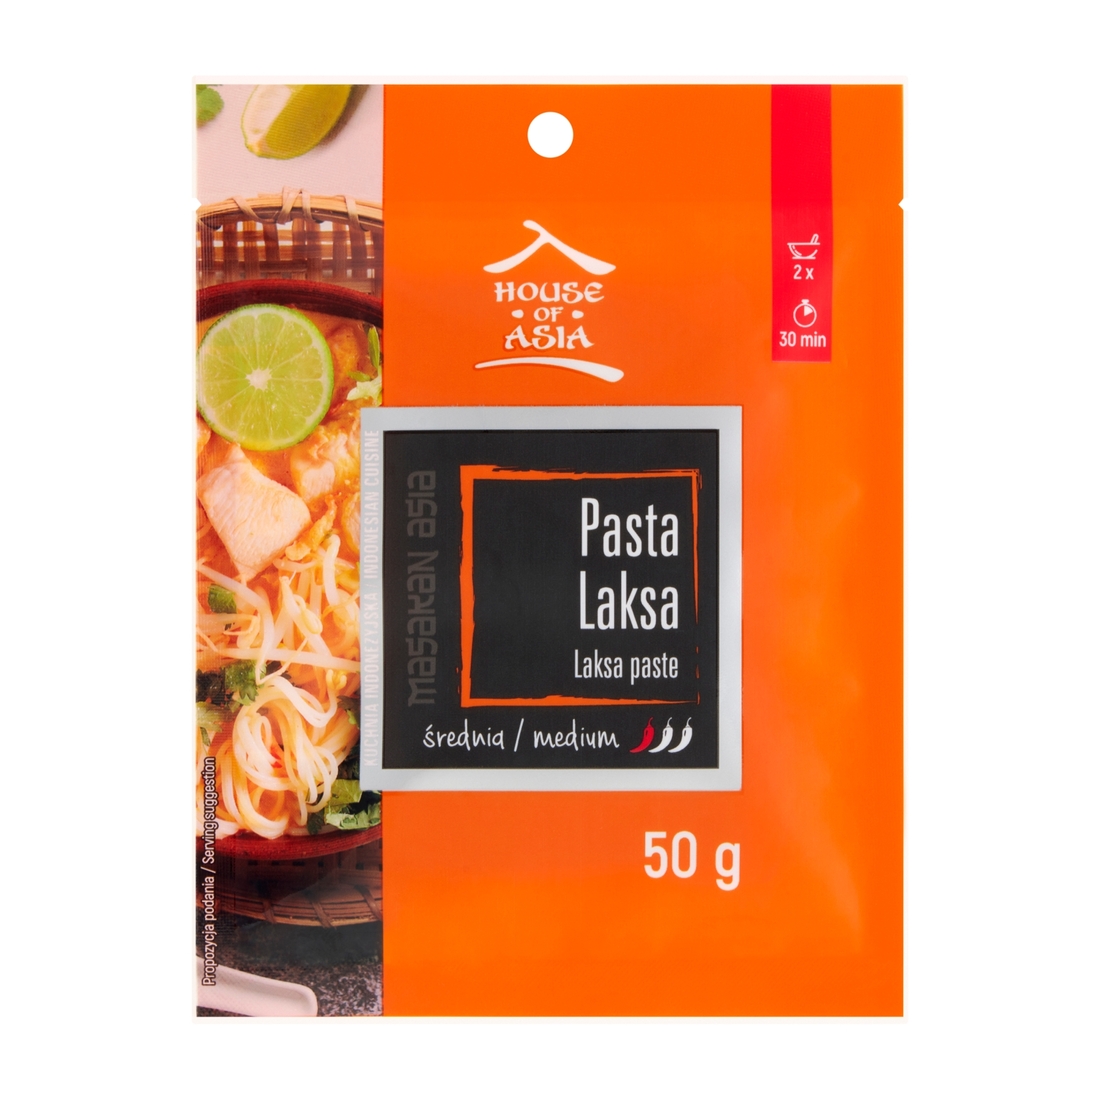 Pasta Laksa stir fry 50g House of Asia House of Asia